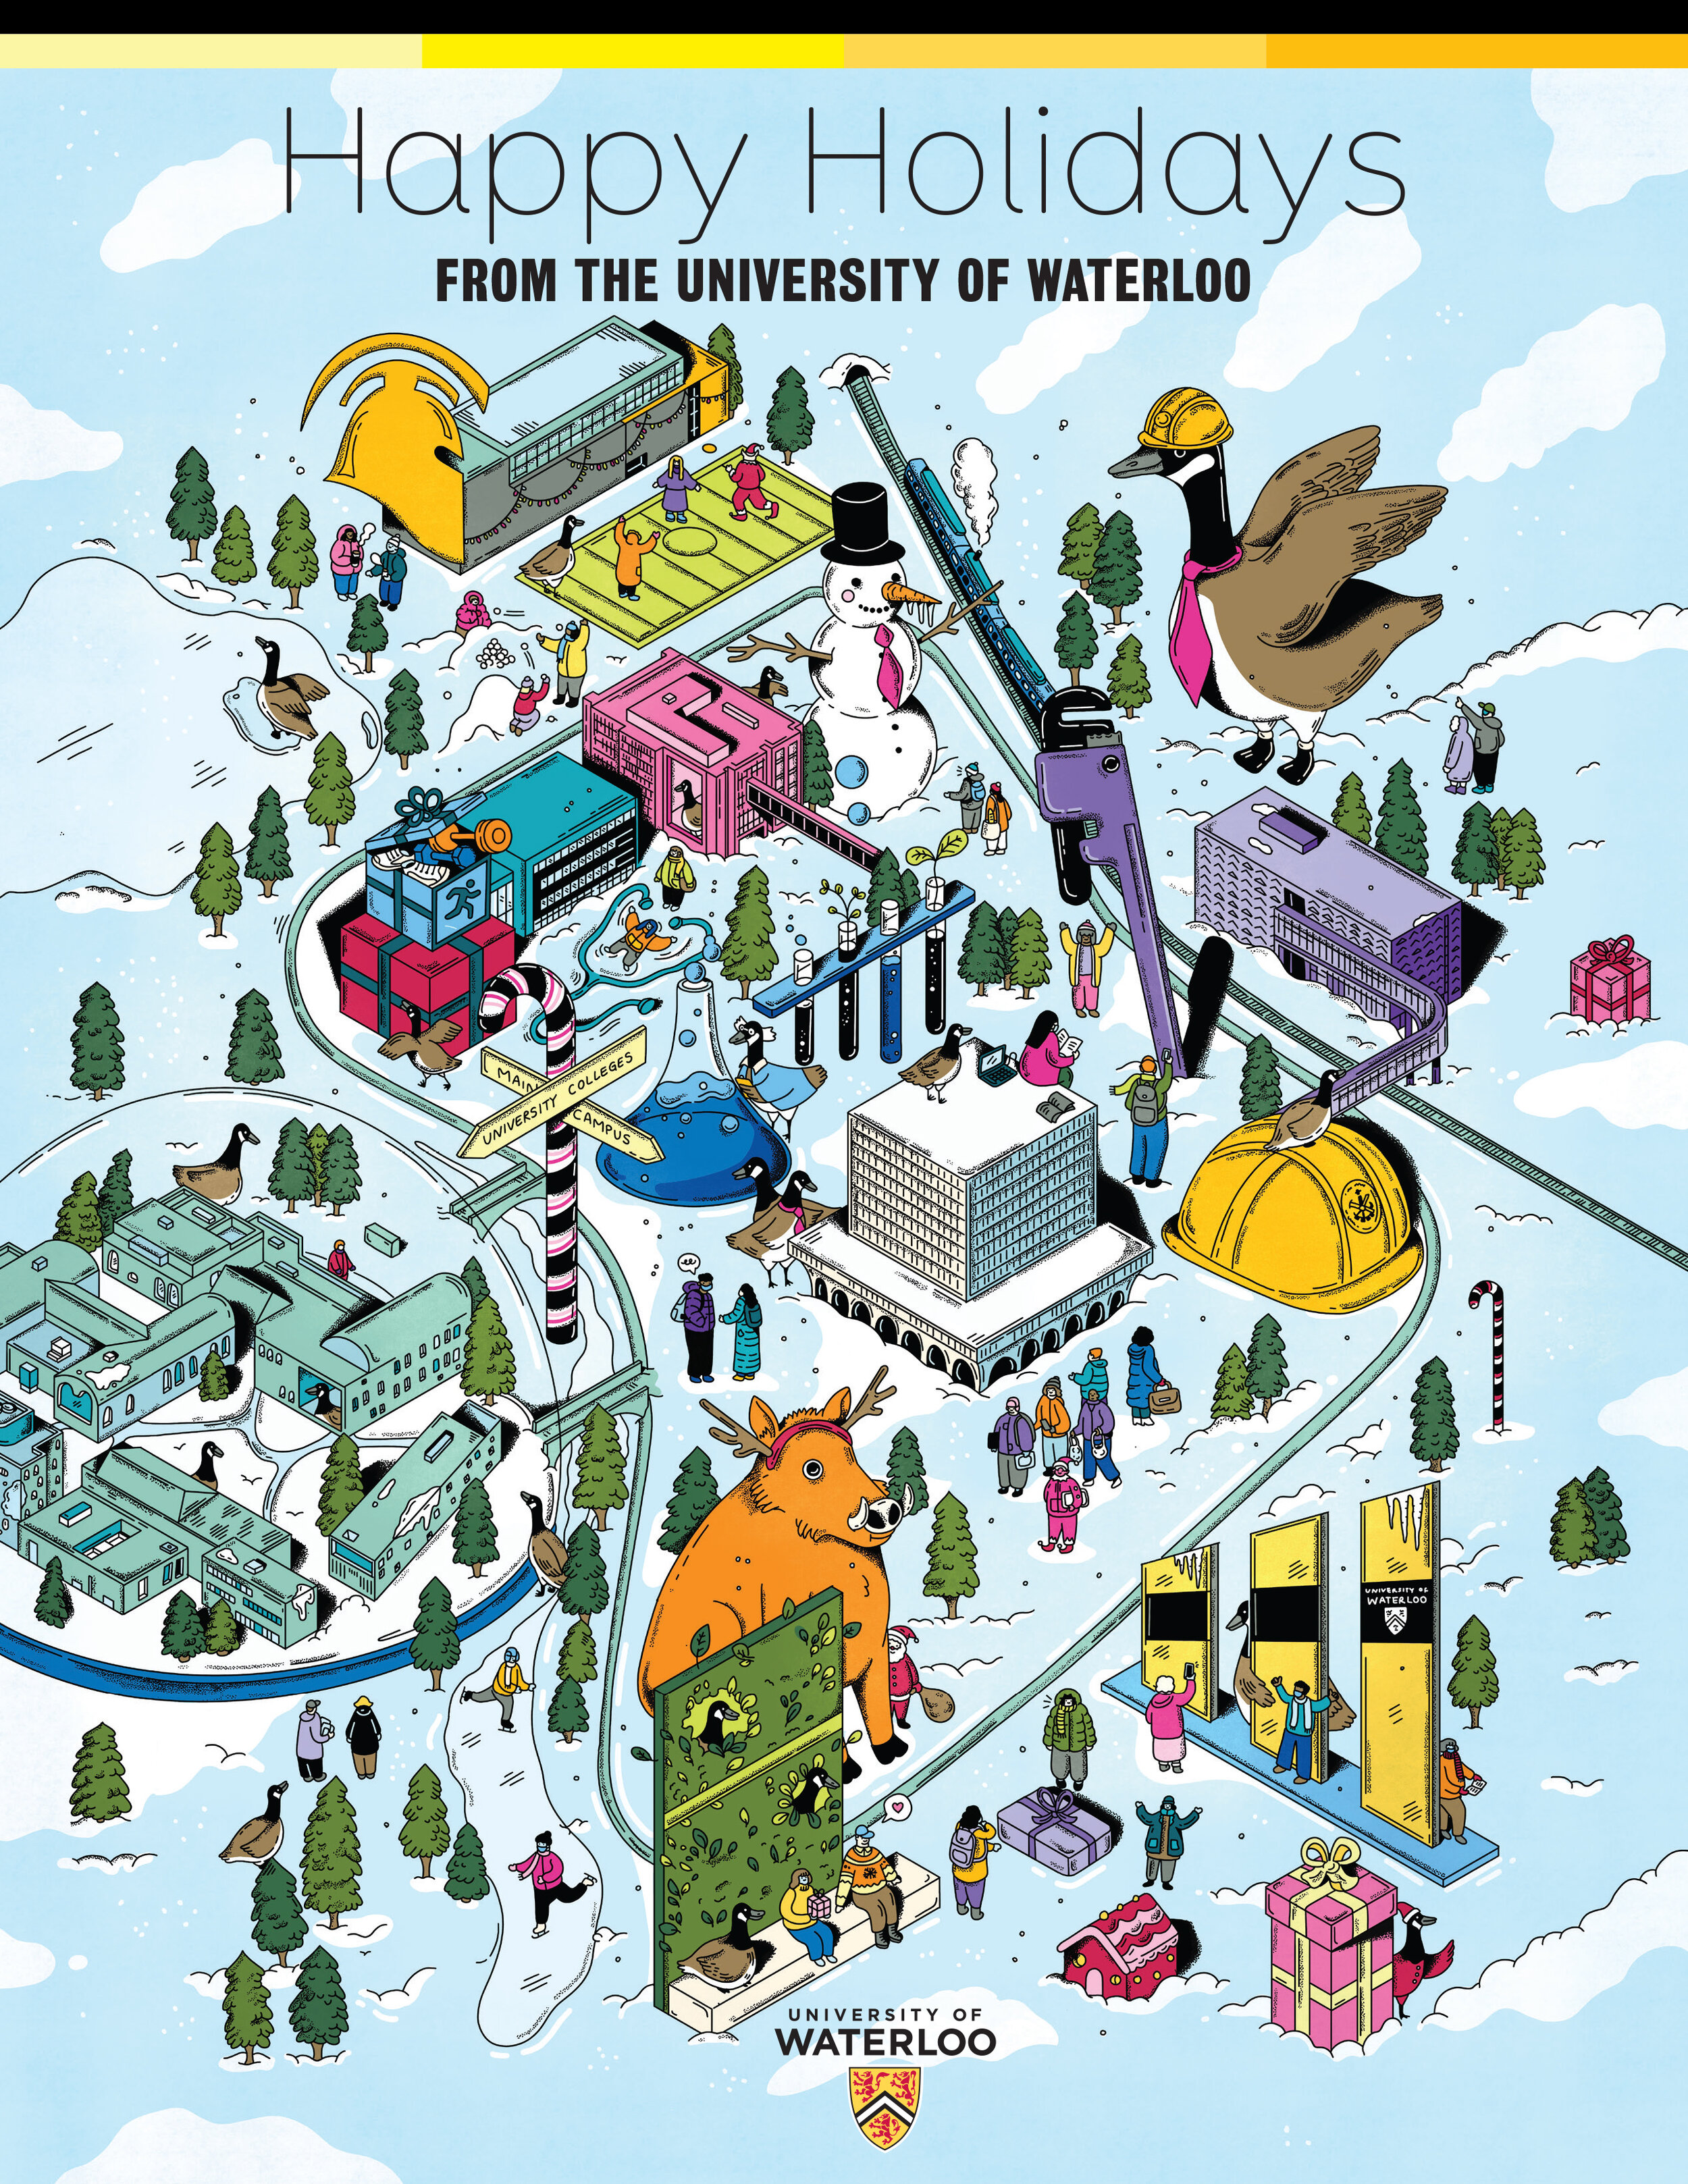 University of Waterloo - Year End Illustration 2020